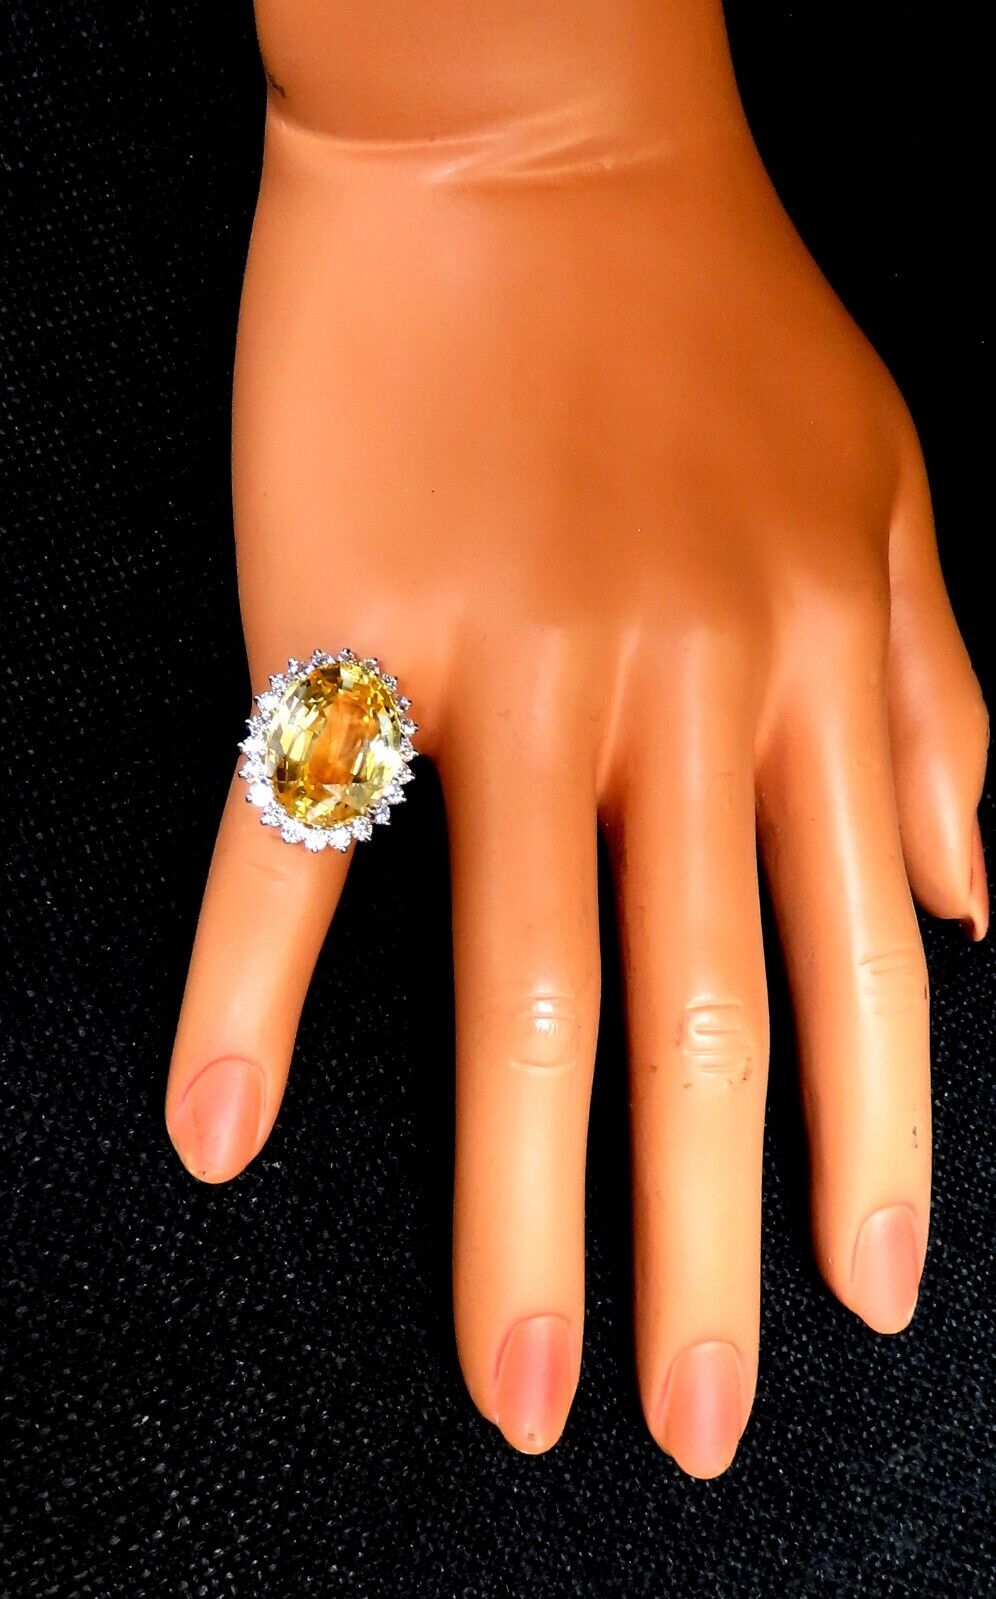 20.17ct GIA Certified Natural No Heat Yellow Sapphire diamonds ring 18kt